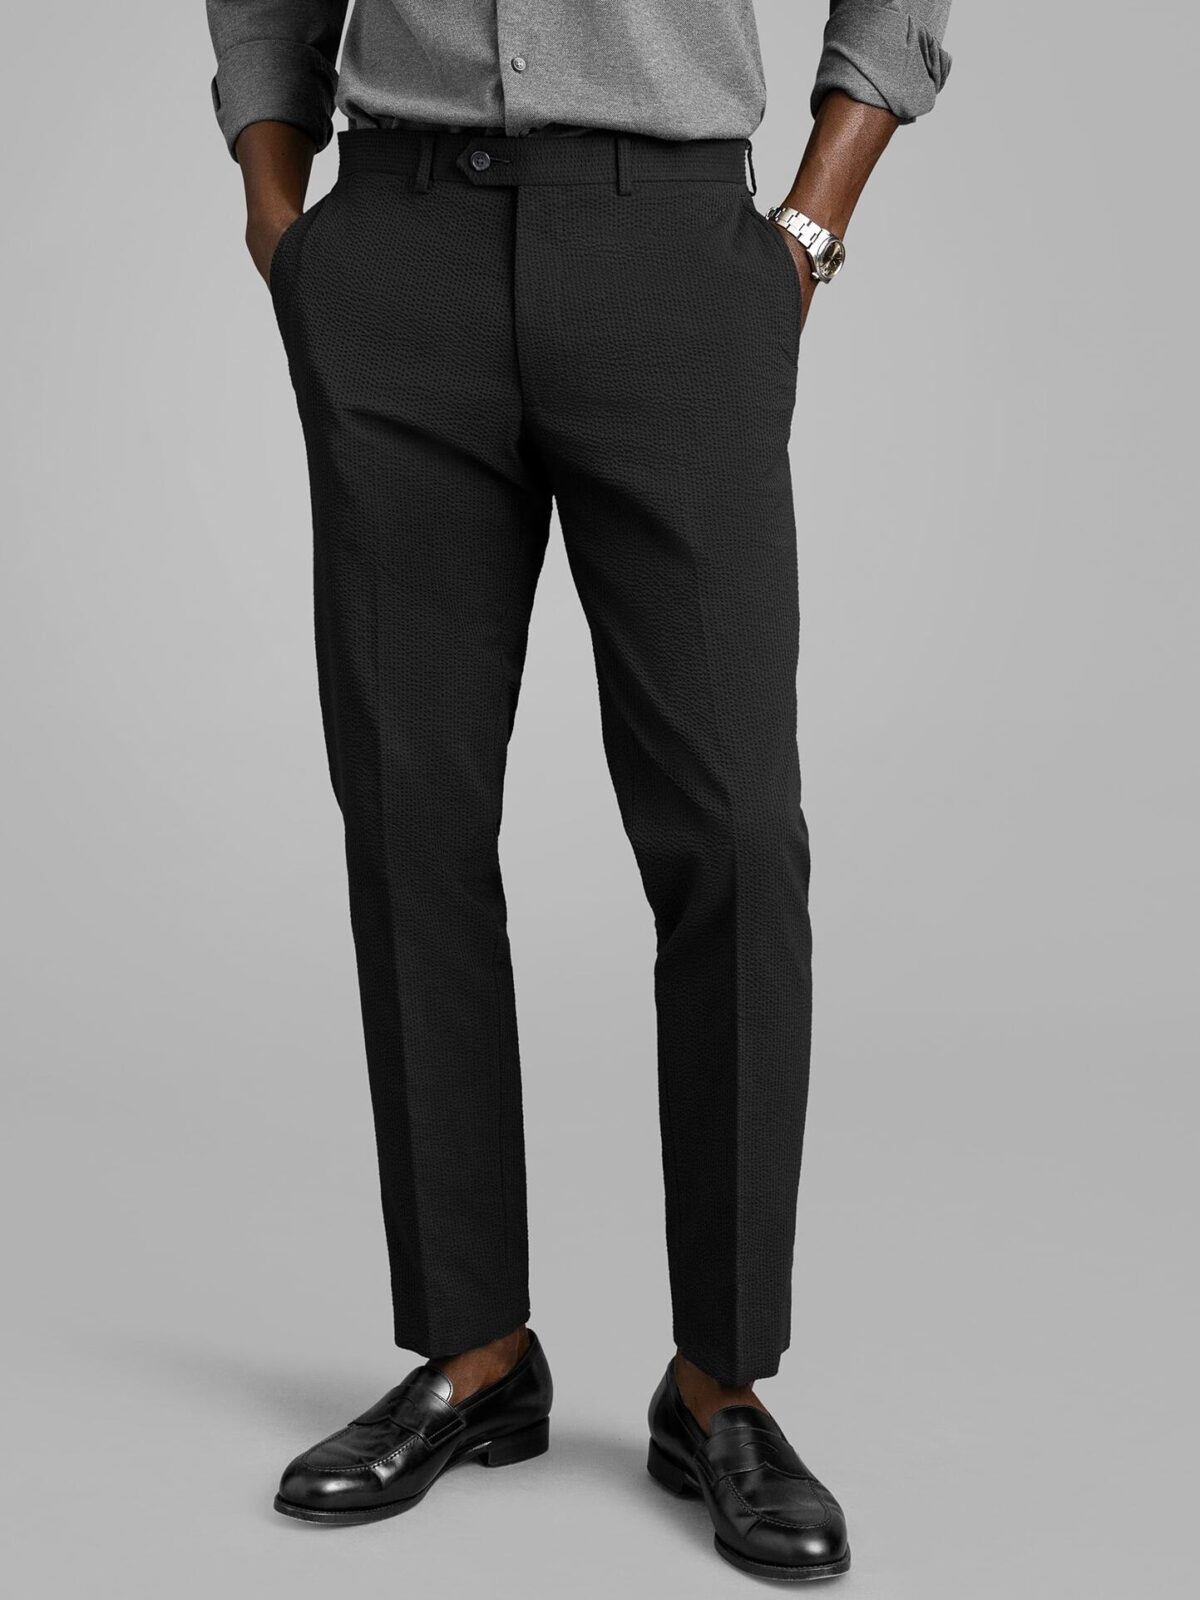 Woven Black Formal Pants – PISTOLS-N-VIXENS-baongoctrading.com.vn